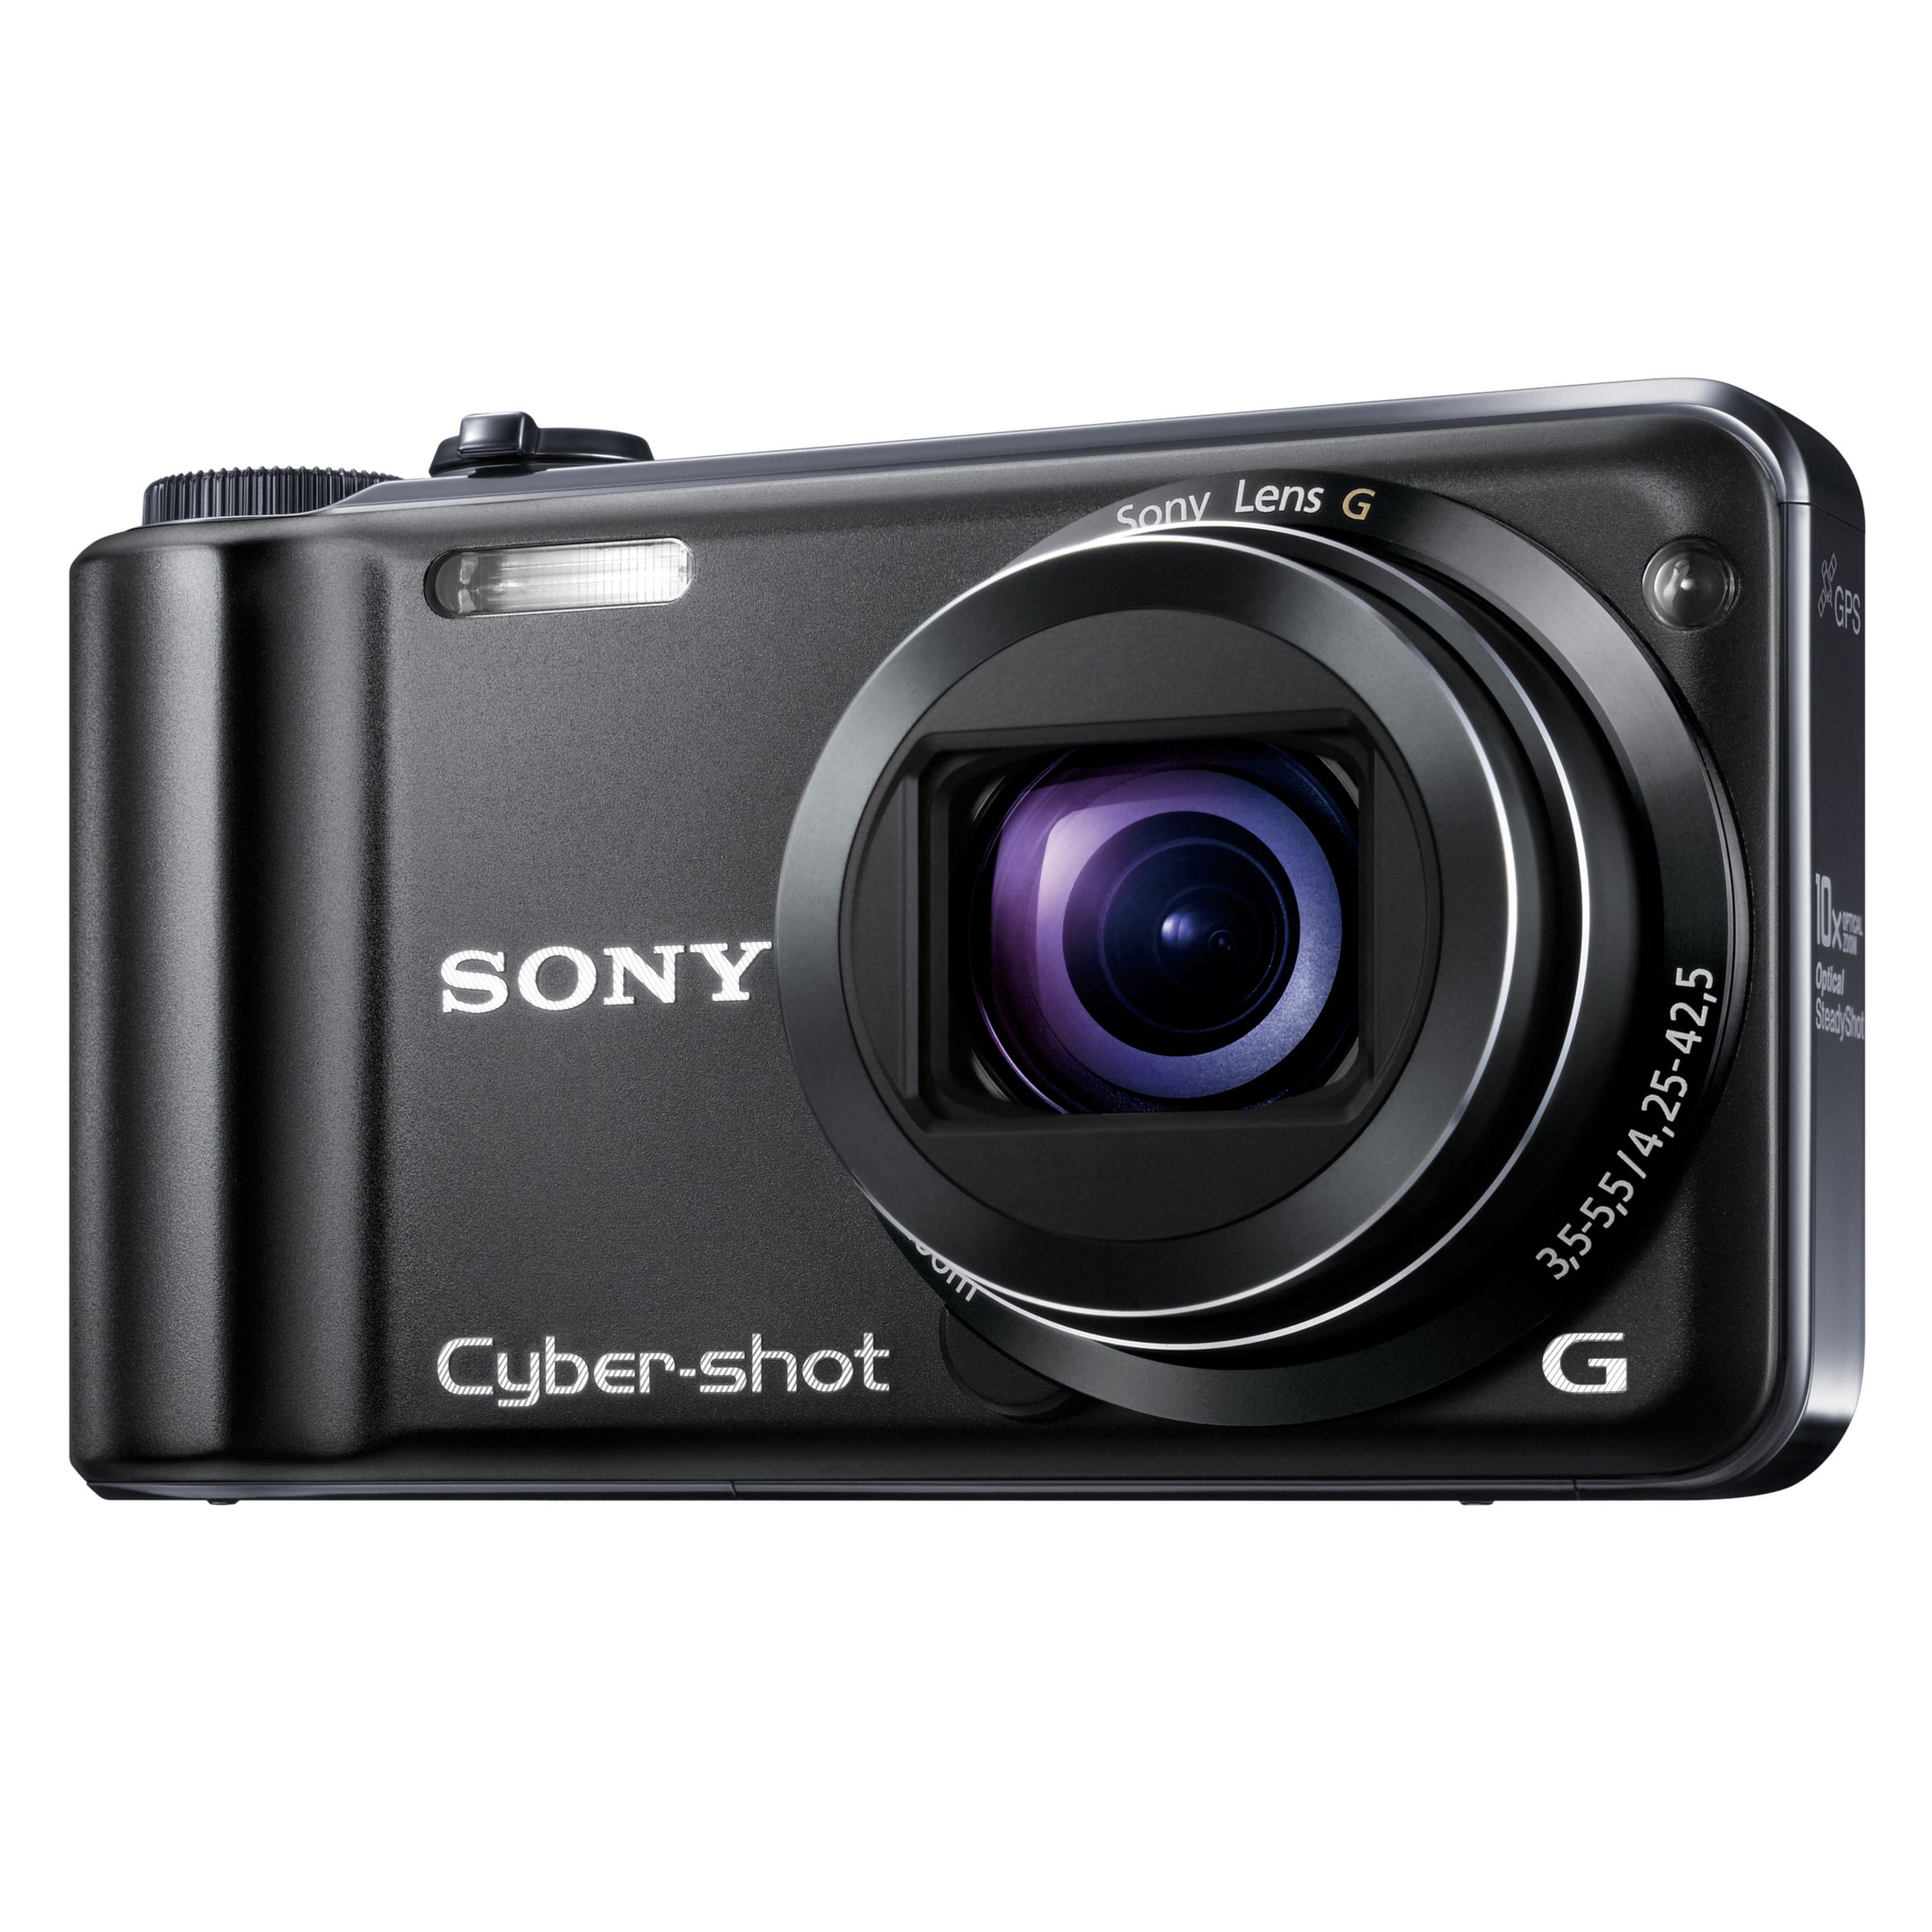 Sony Cyber-shot DSC-HX5 Digital Camera, Black at John Lewis